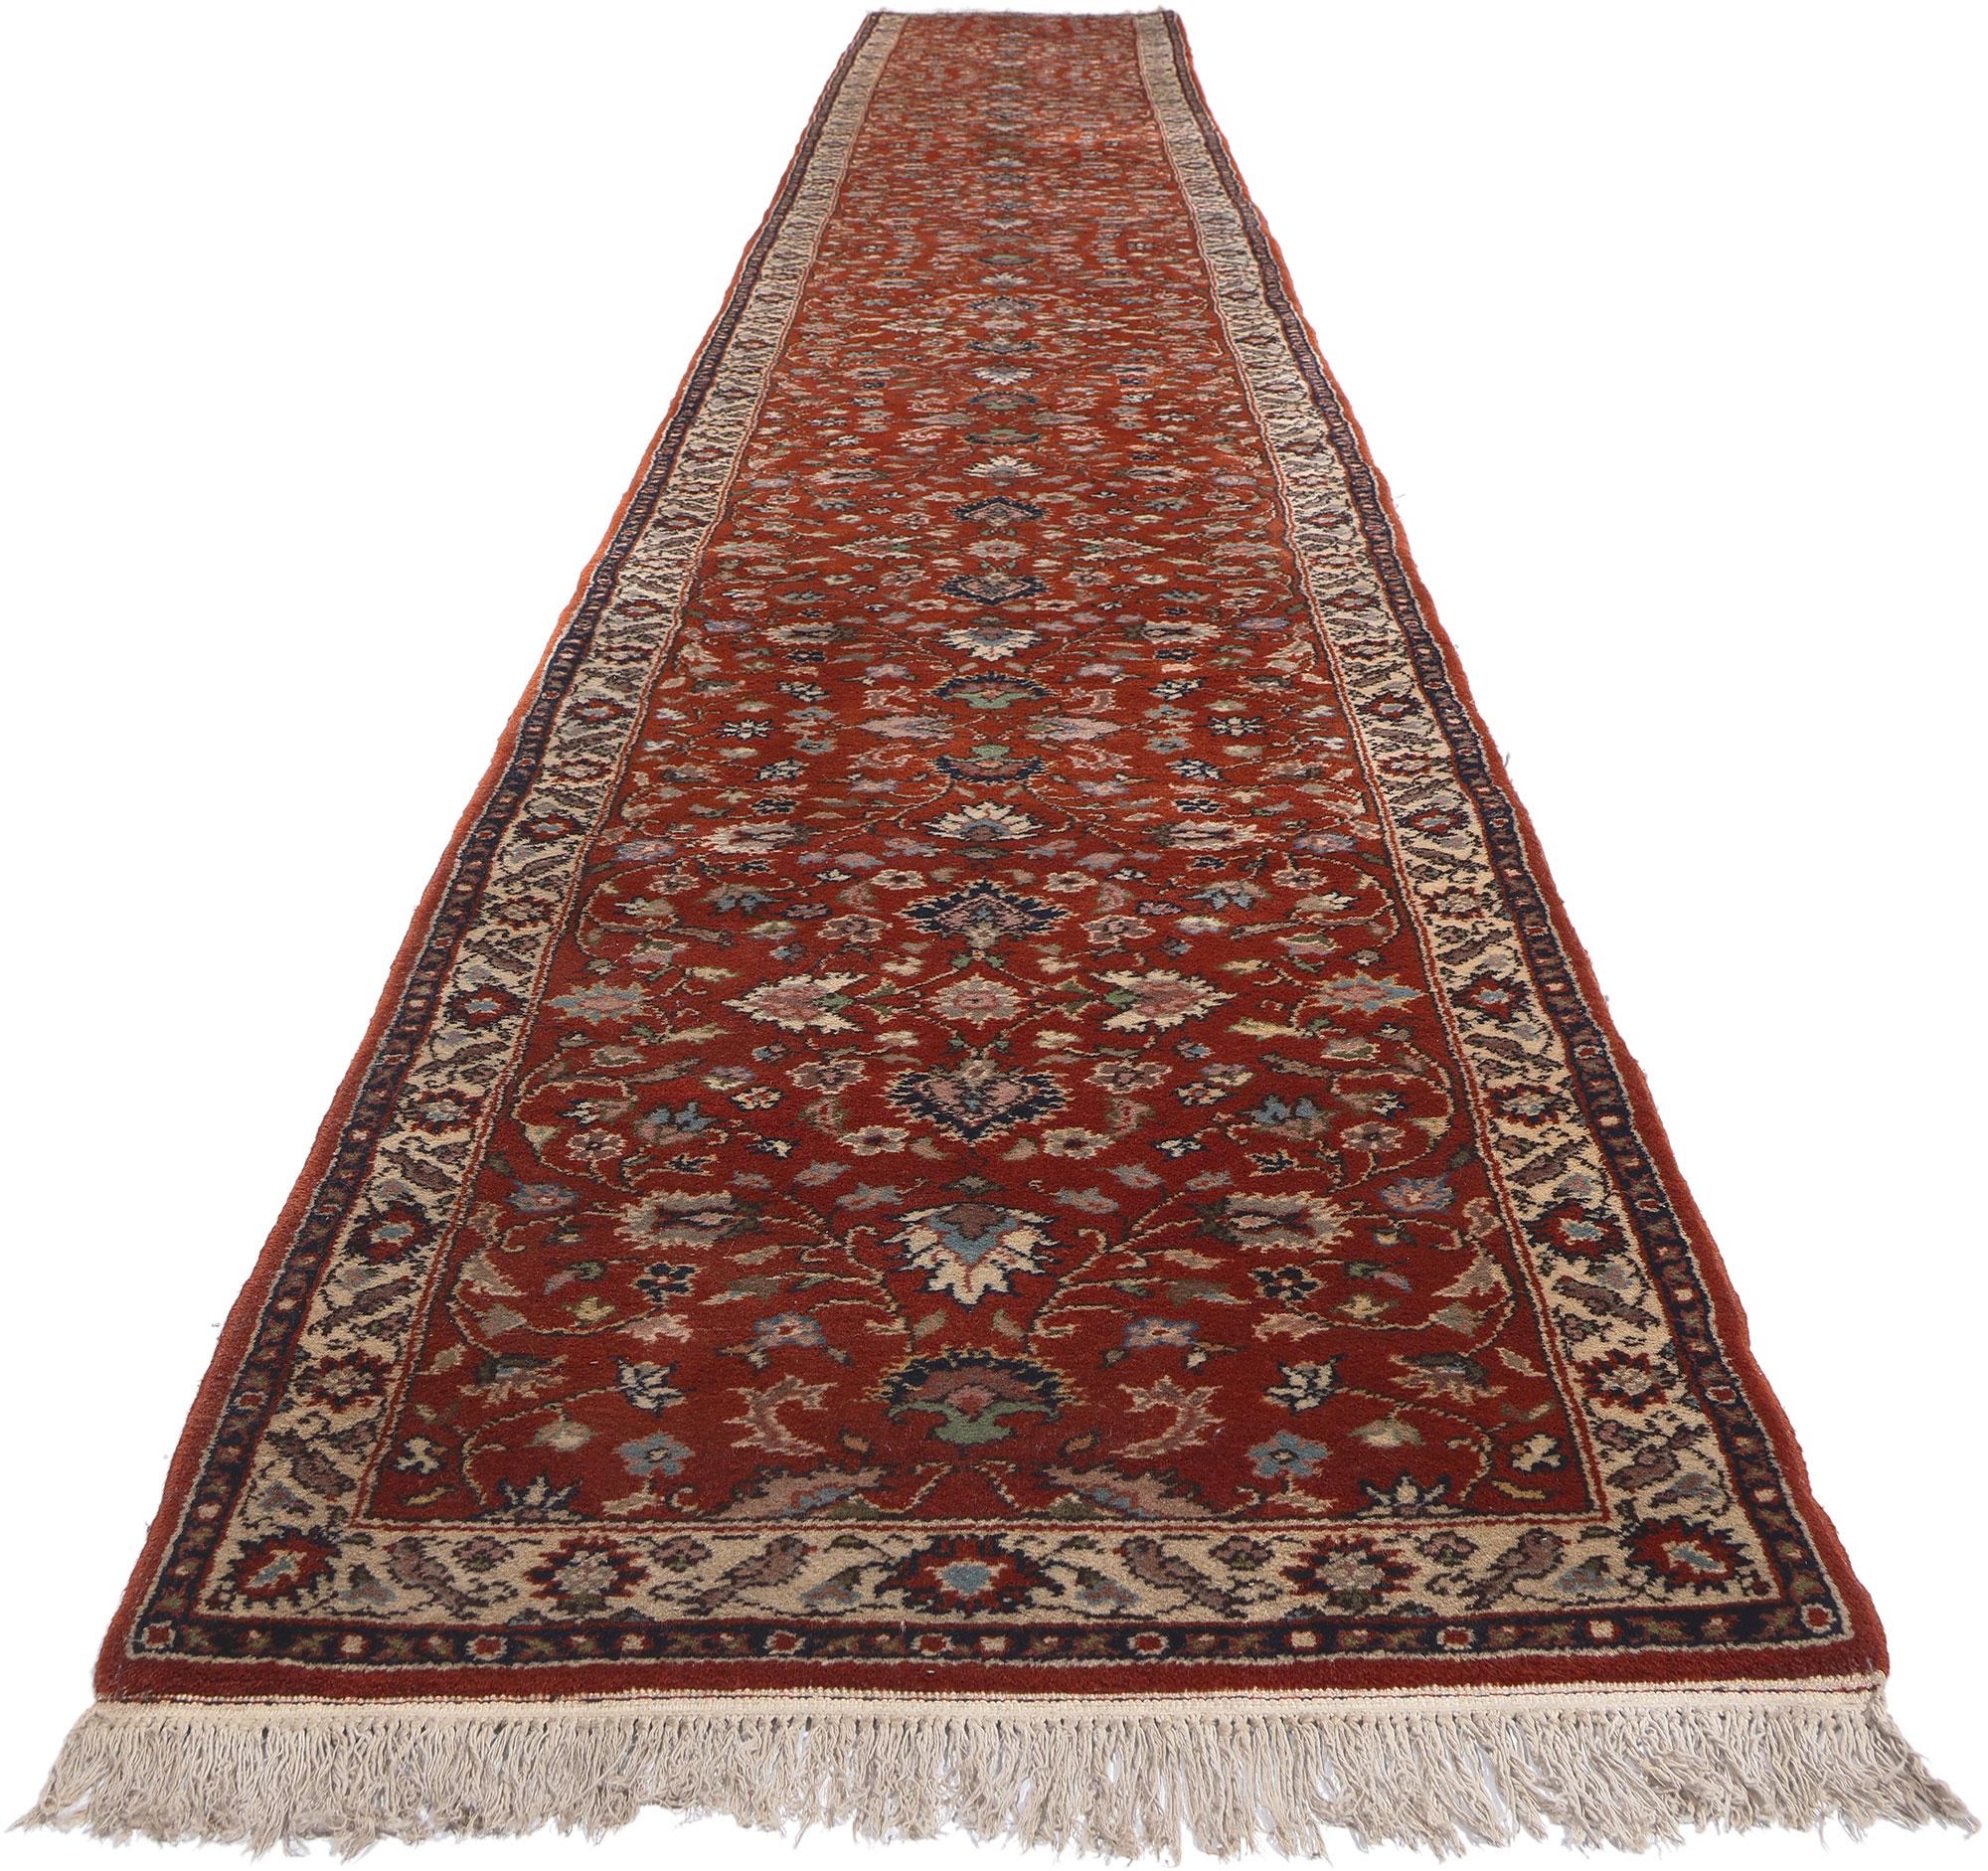 Spanish Colonial Vintage Romanian Carpet, 02'08 x 22'05 For Sale